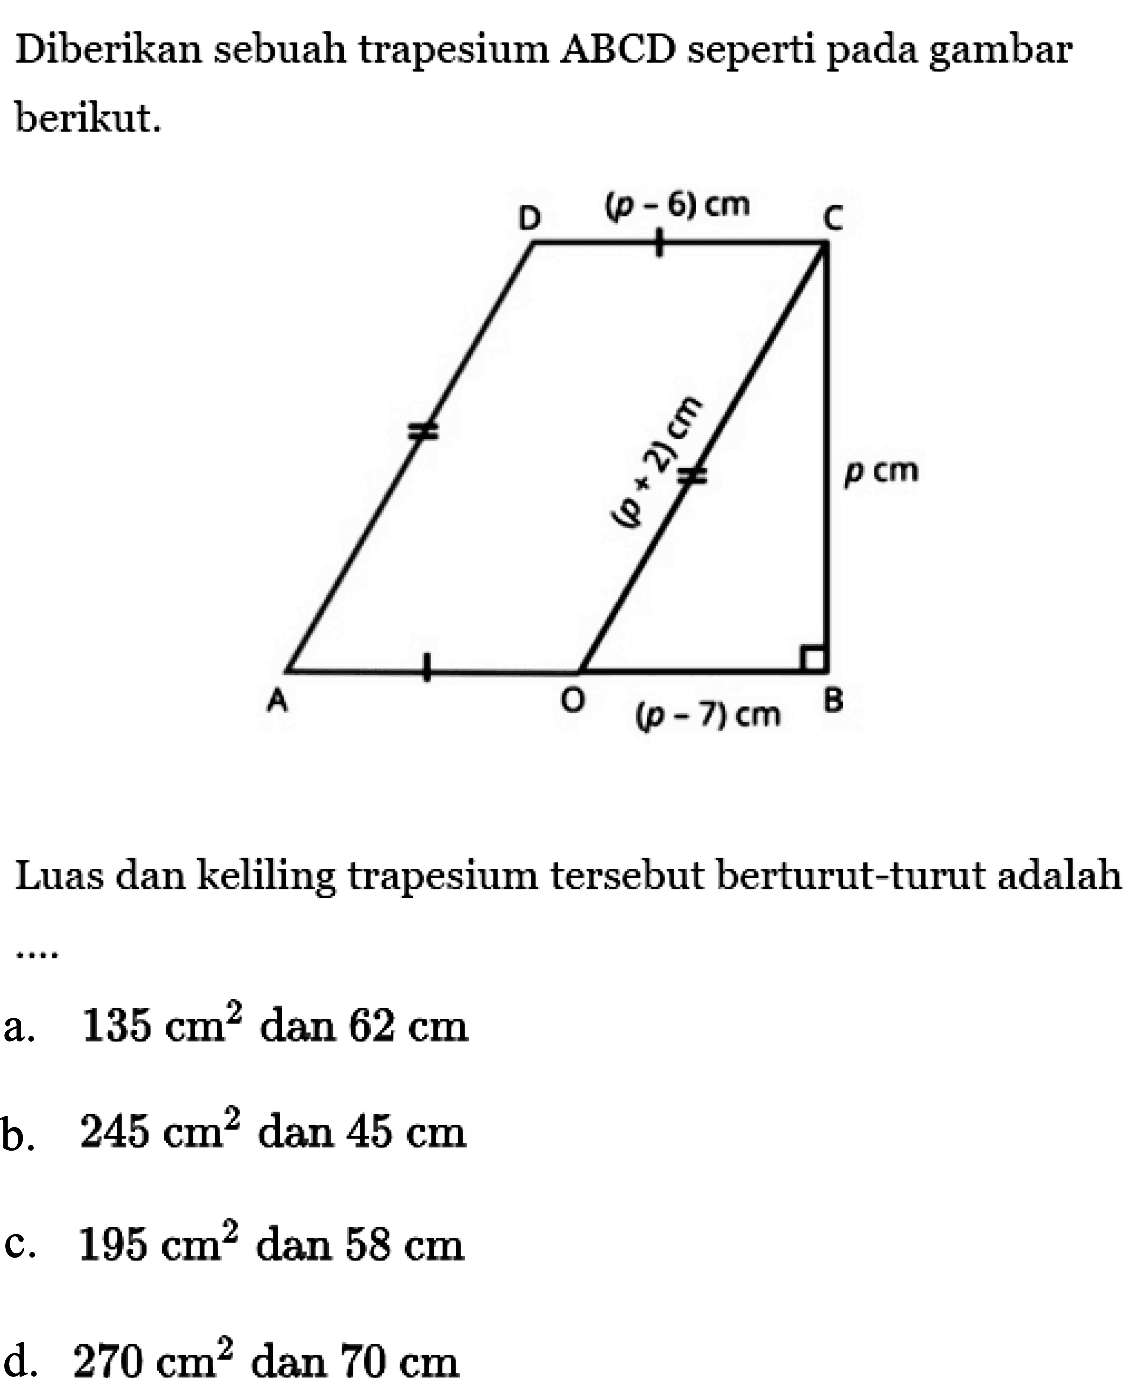 Diberikan sebuah trapesium ABCD seperti pada gambar berikut. (p-6) cm (p+2) cm (p-7) cm p cmLuas dan keliling trapesium tersebut berturut-turut adalah